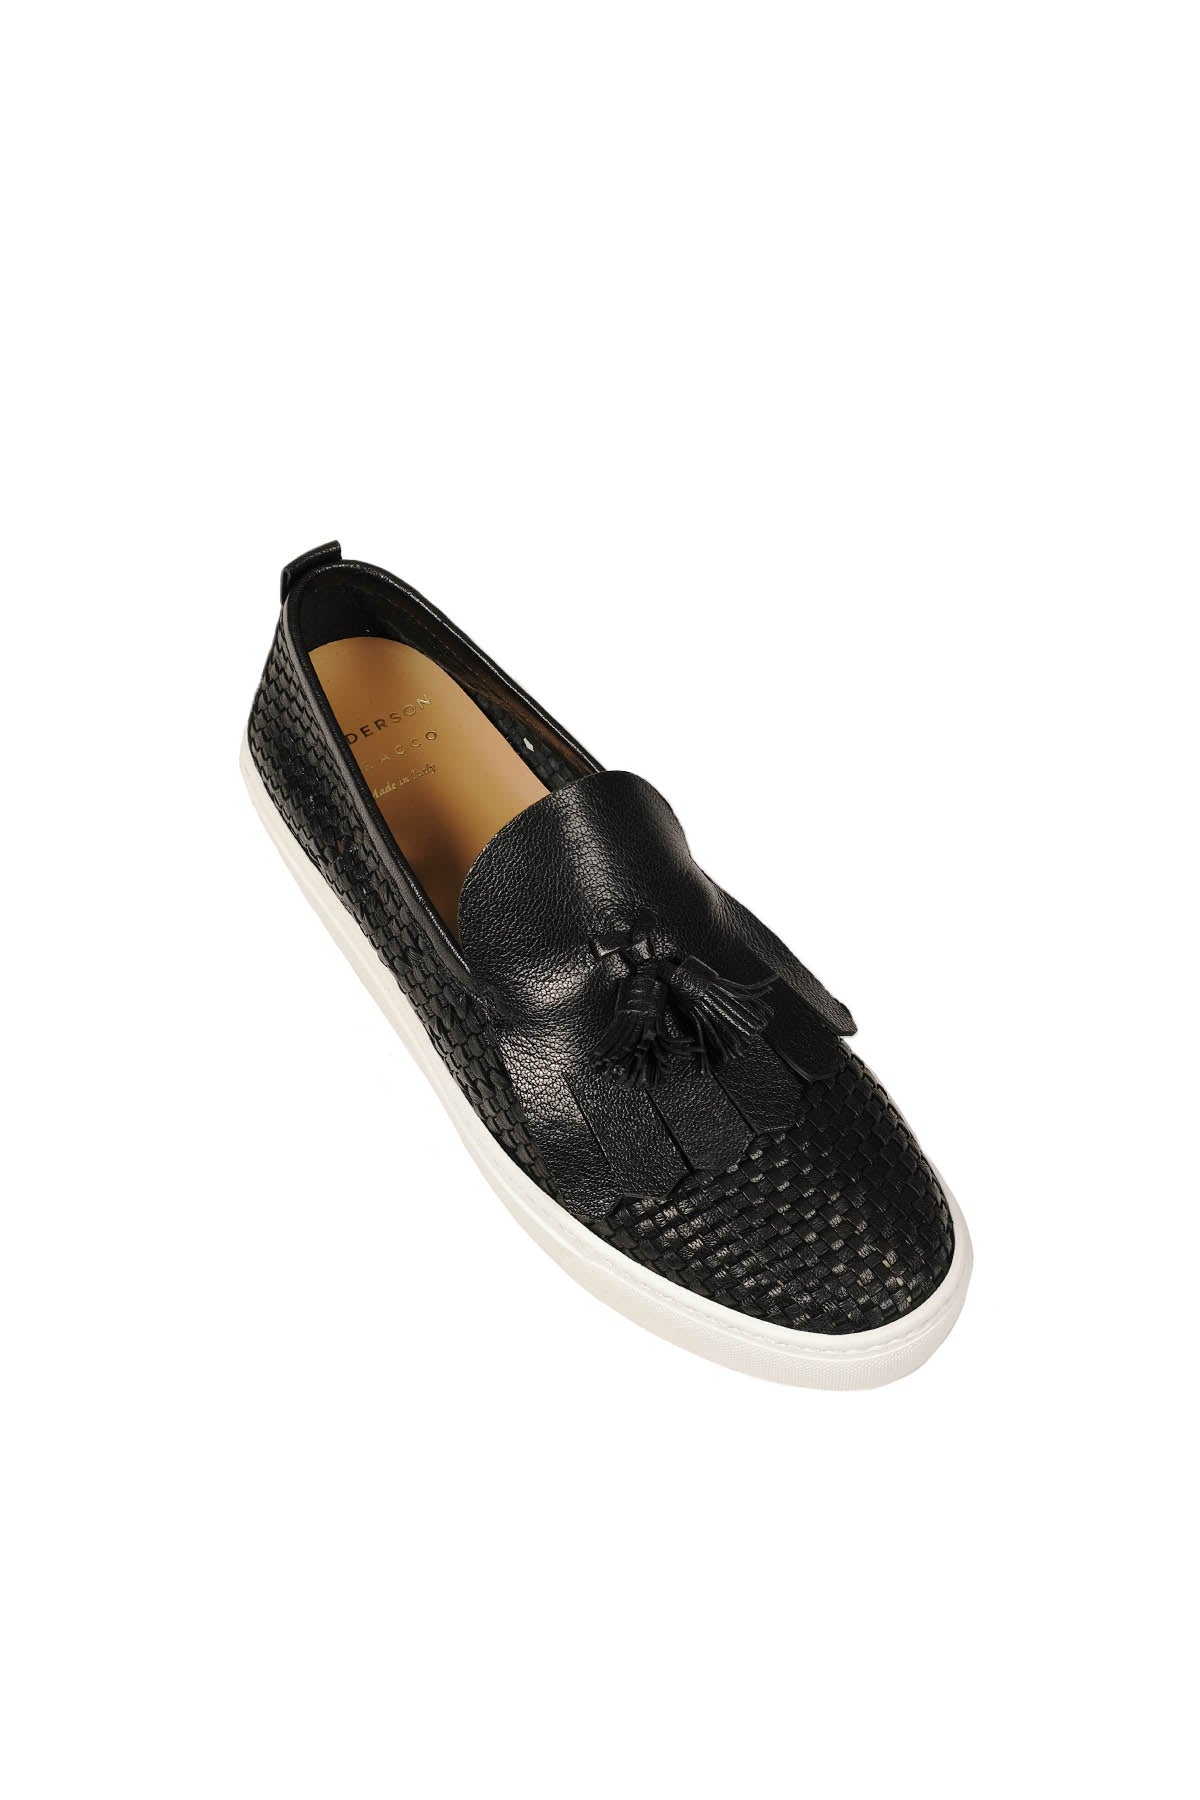 Henderson Marta Püsküllü Loafer Ayakkabı-Libas Trendy Fashion Store